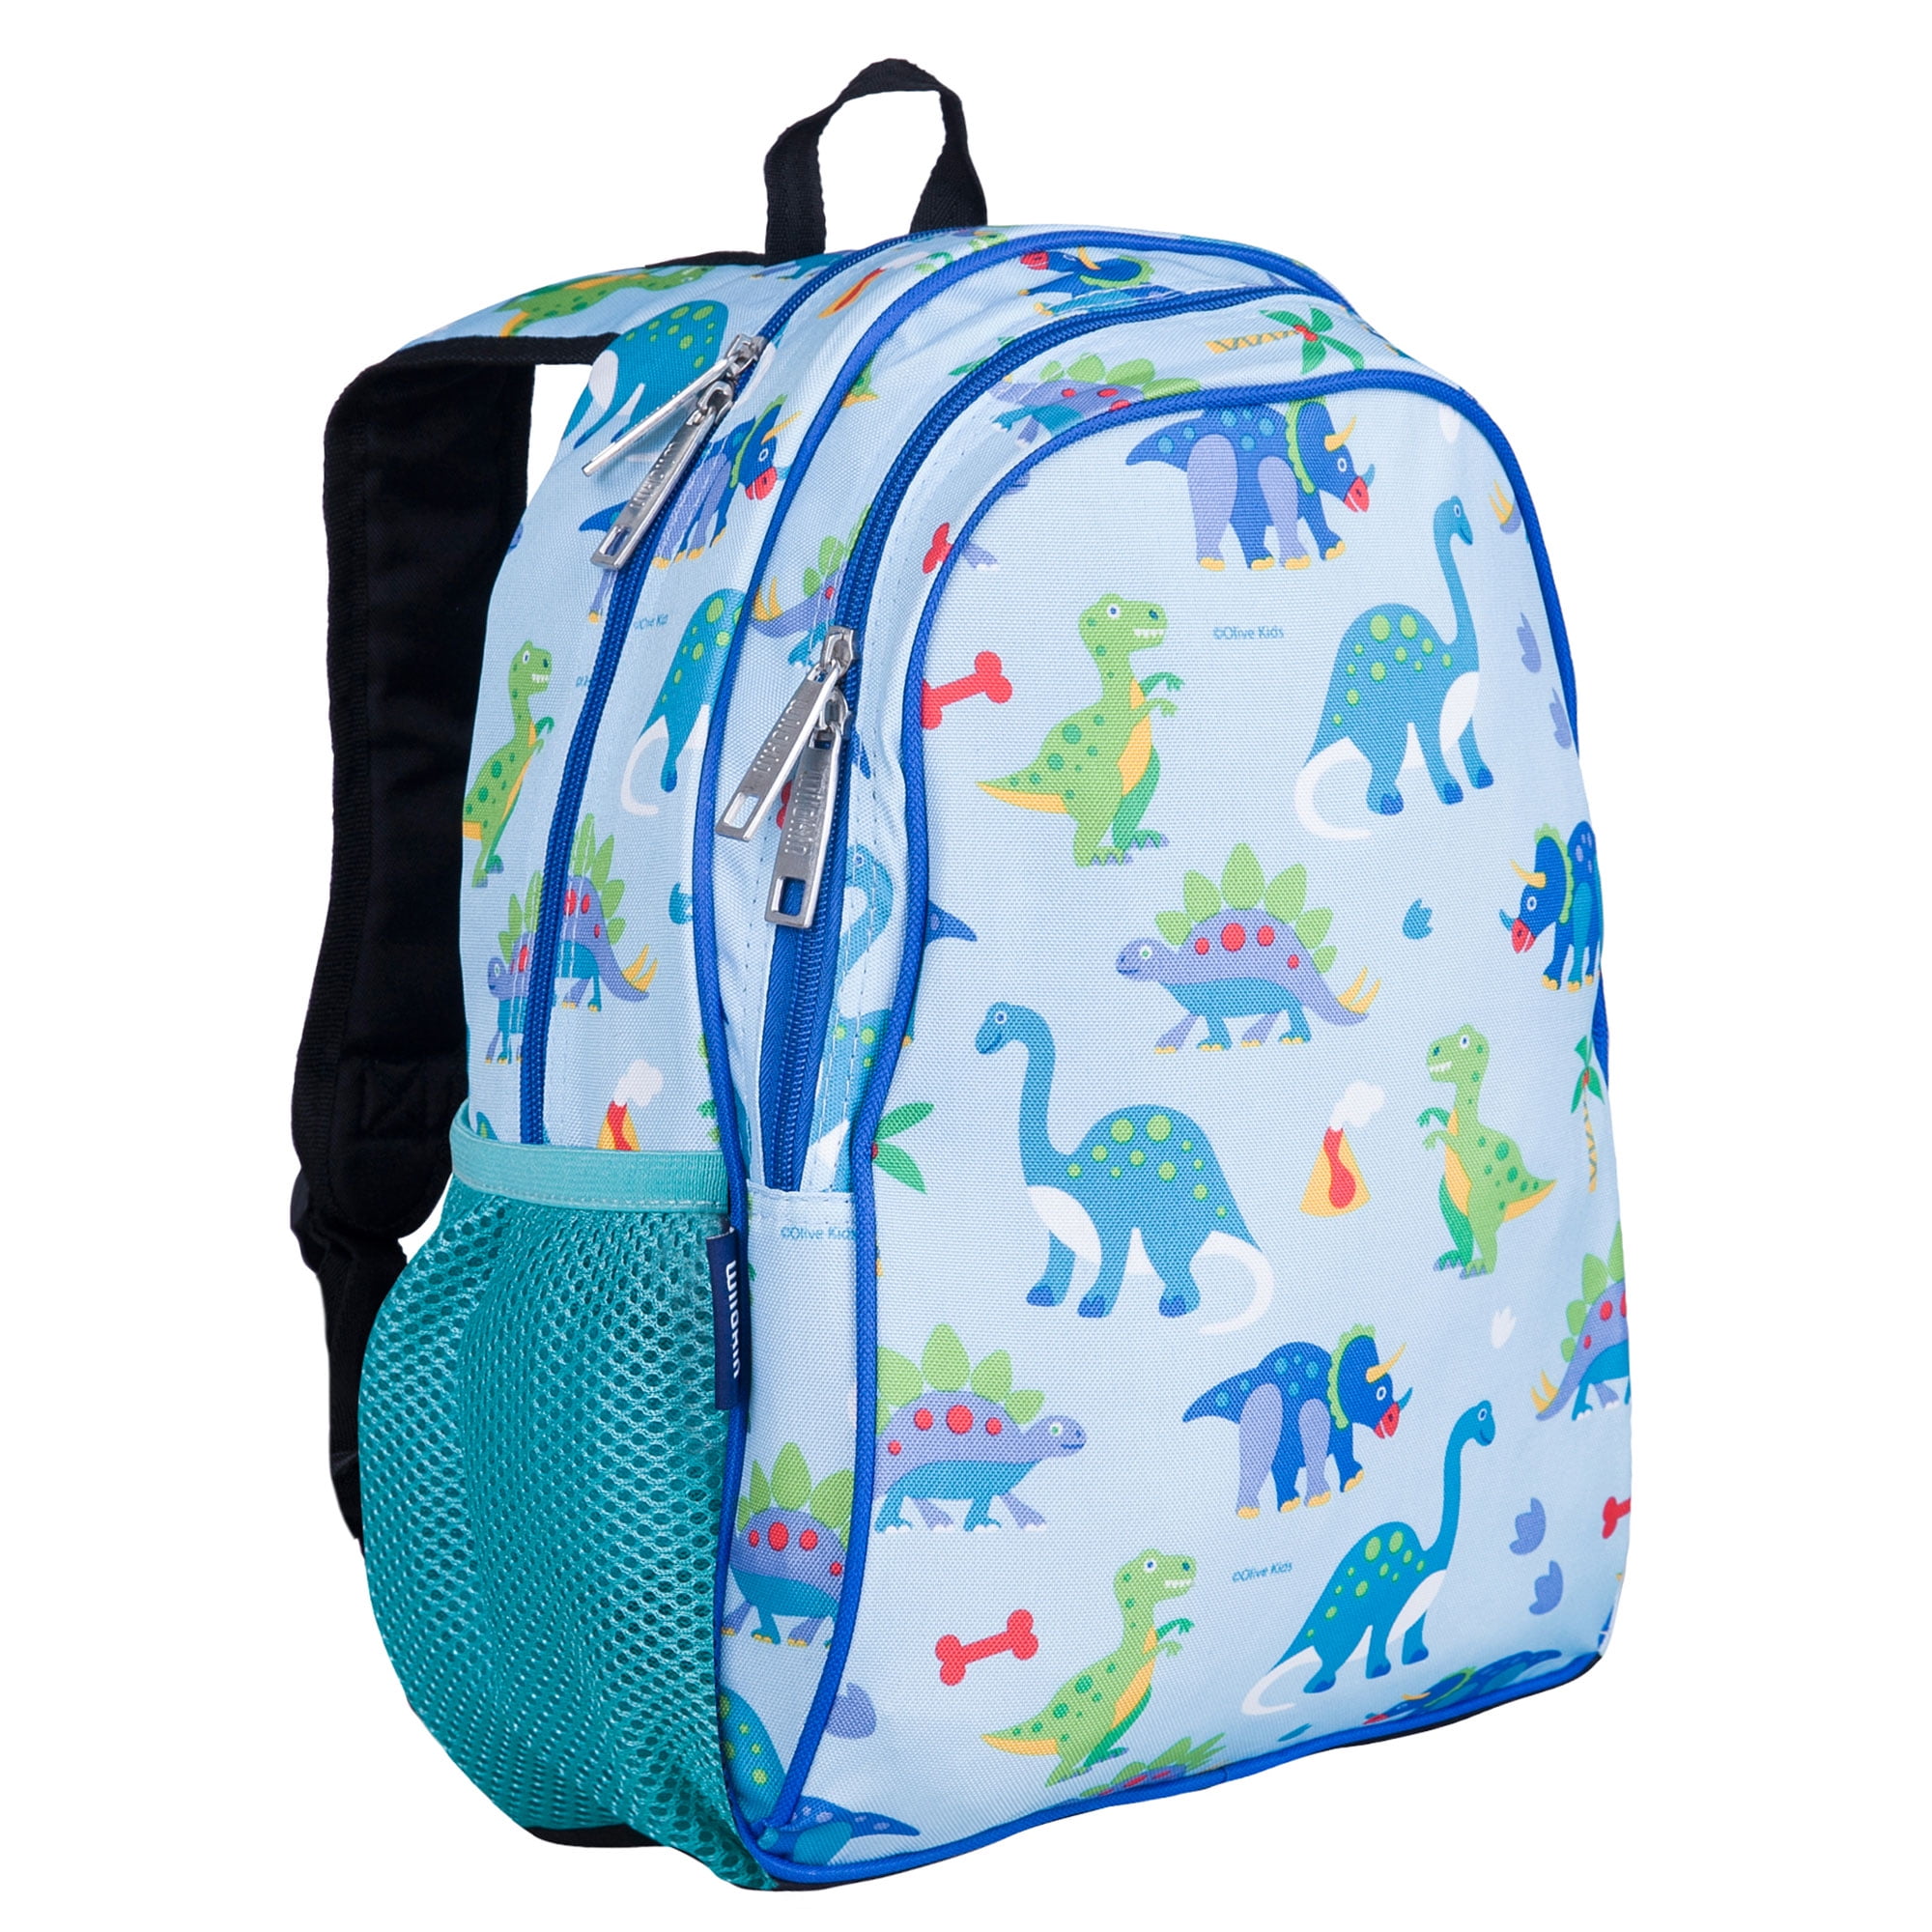 Gymboree Boy Toddler Backpack Lunch Box Combo Frog Geometric Camo Skake UPic NEW 